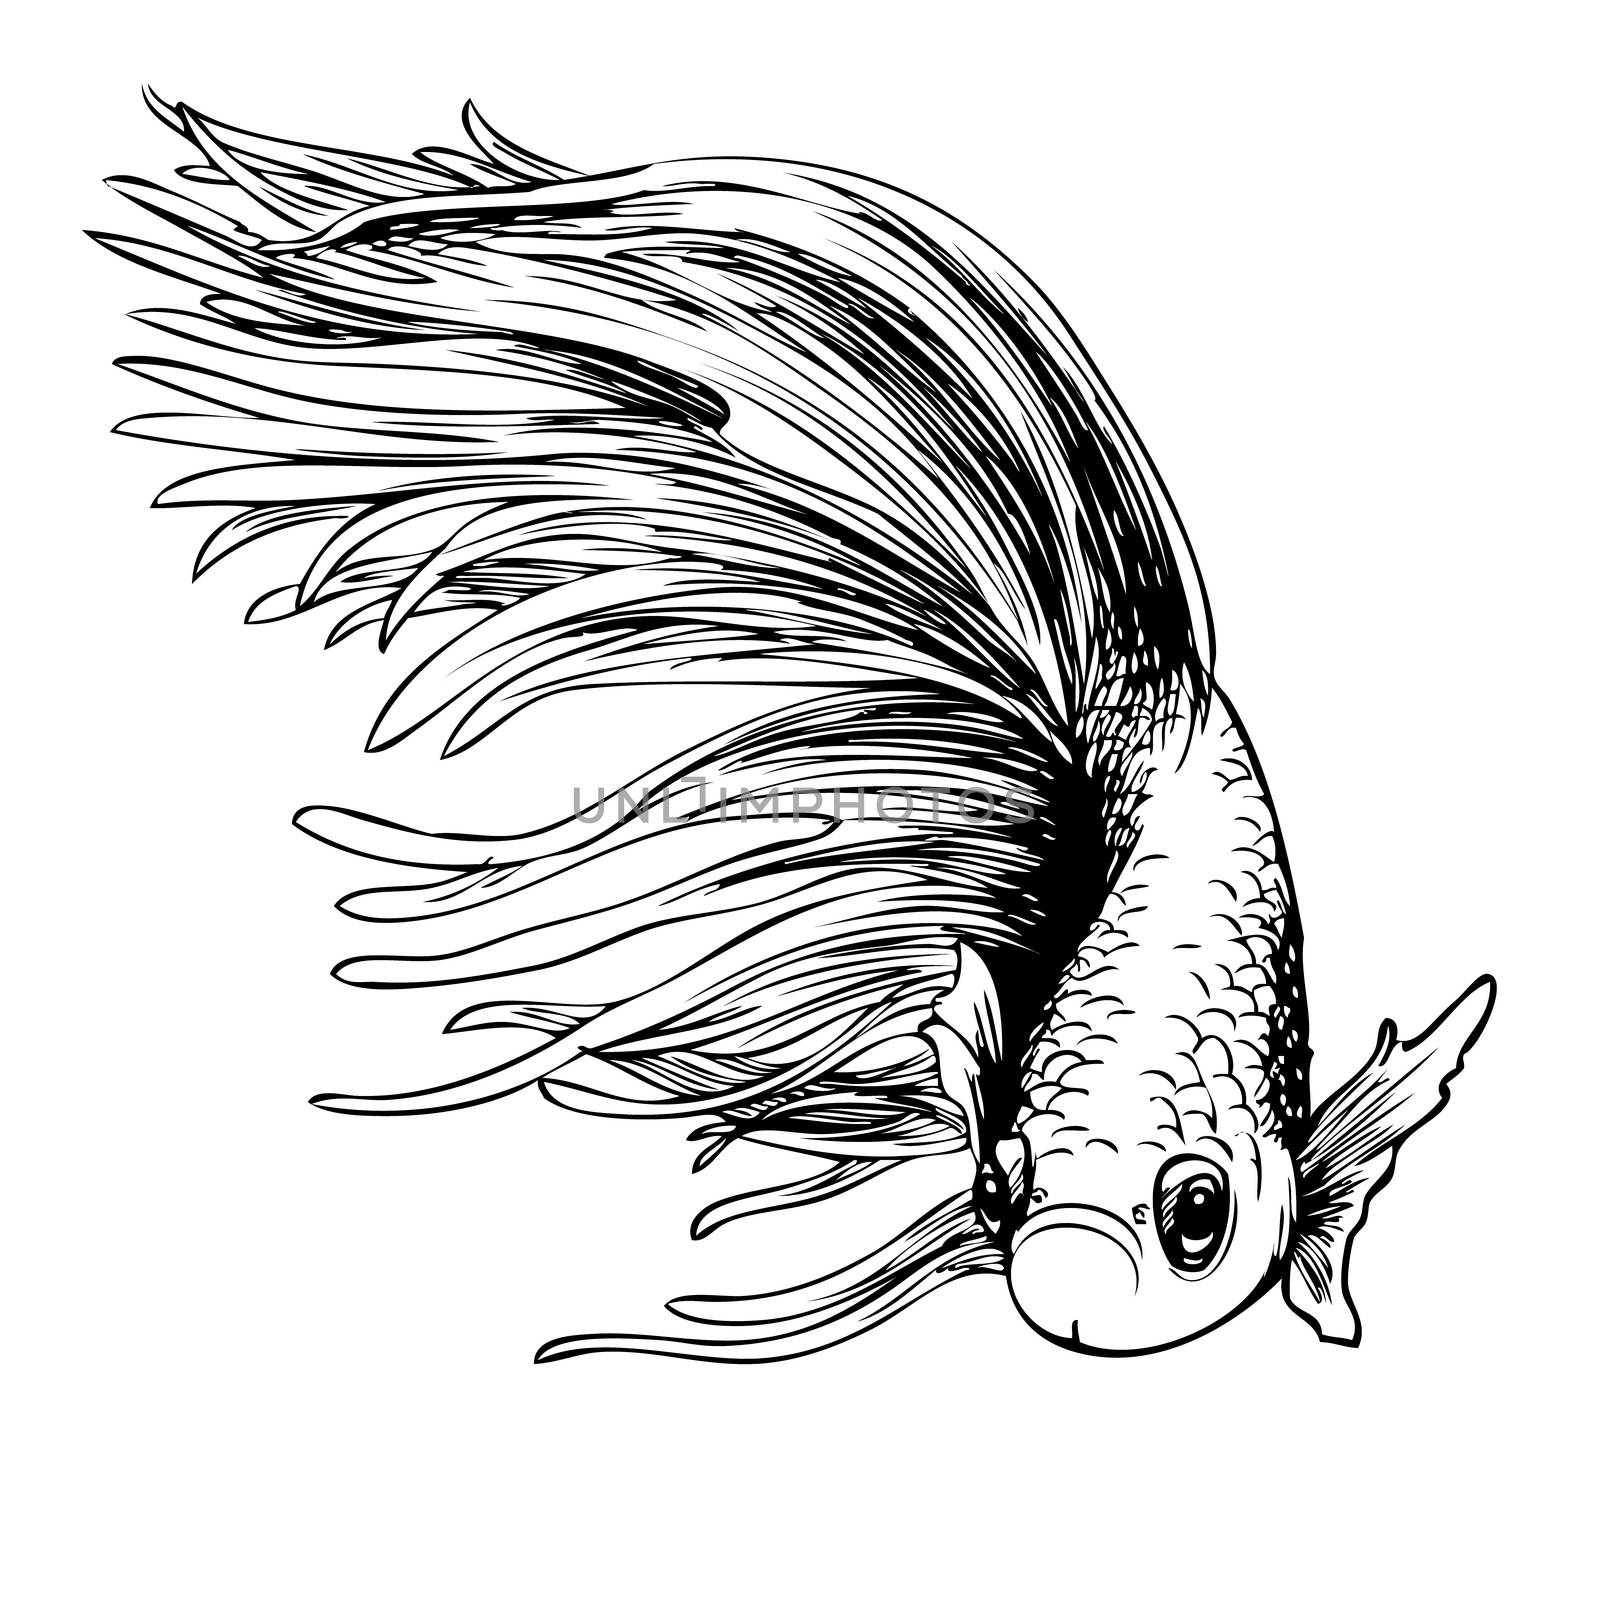 freehand sketch illustration of Betta splendens, Siamese fighting fish doodle hand drawn